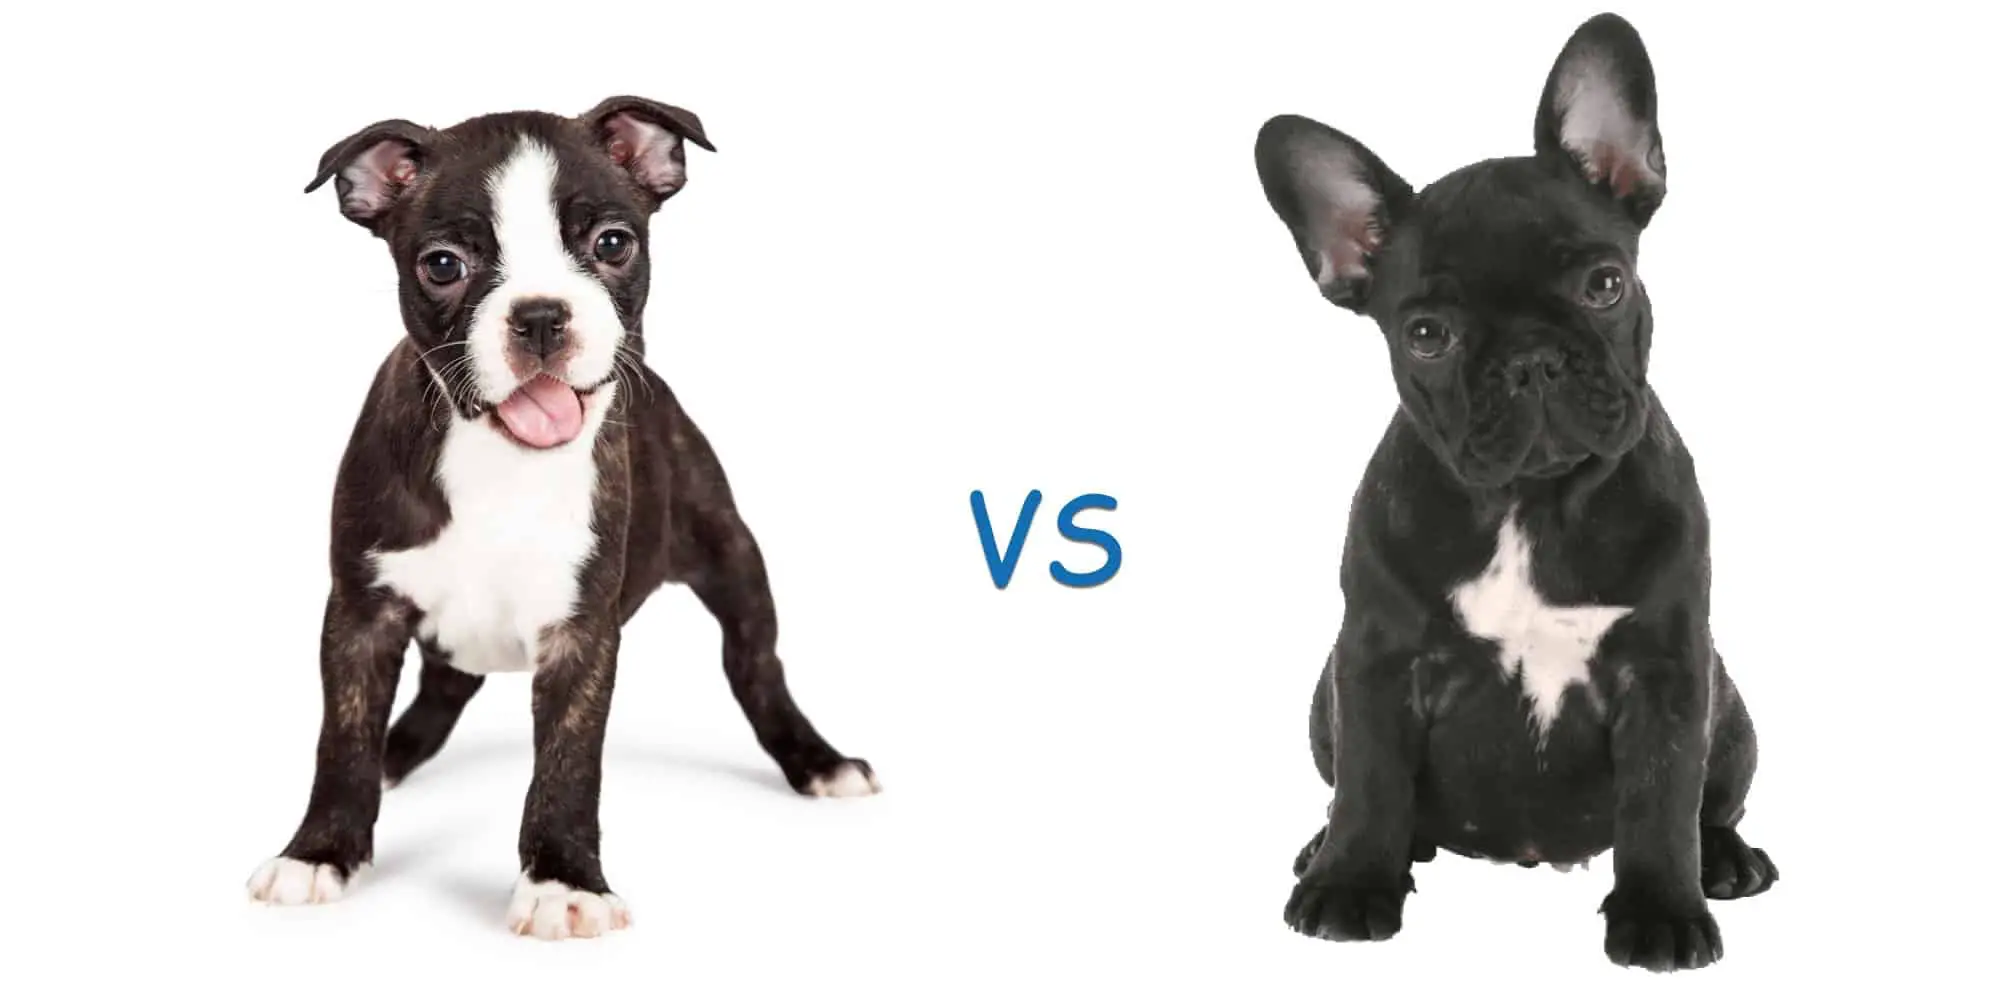 Boston Terrier vs French Bulldog - The Major Differences